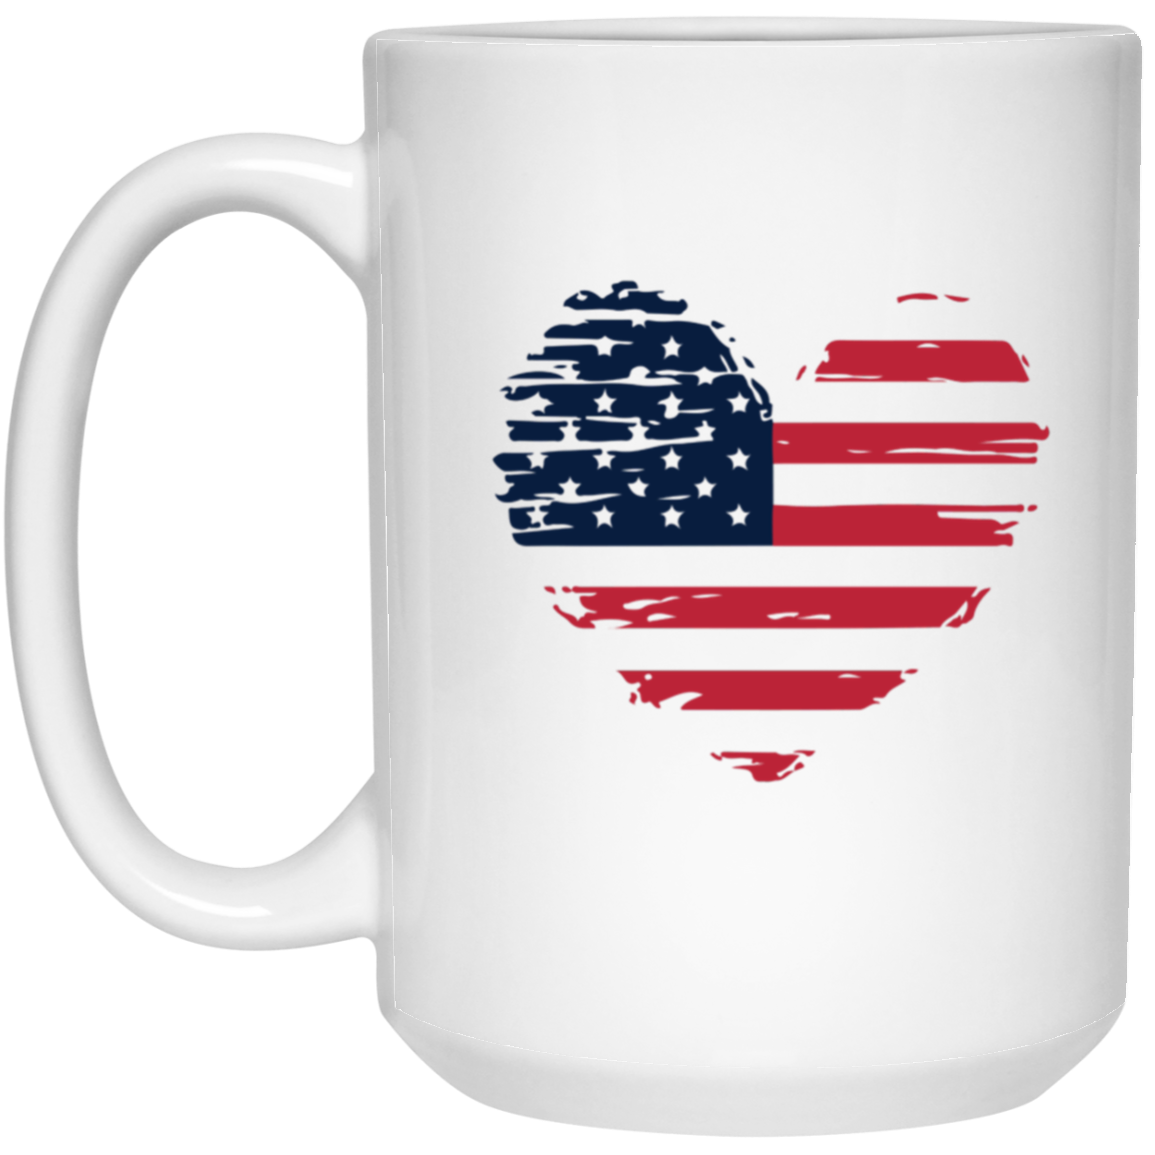 American Heart - 11 & 15 oz. White Mug